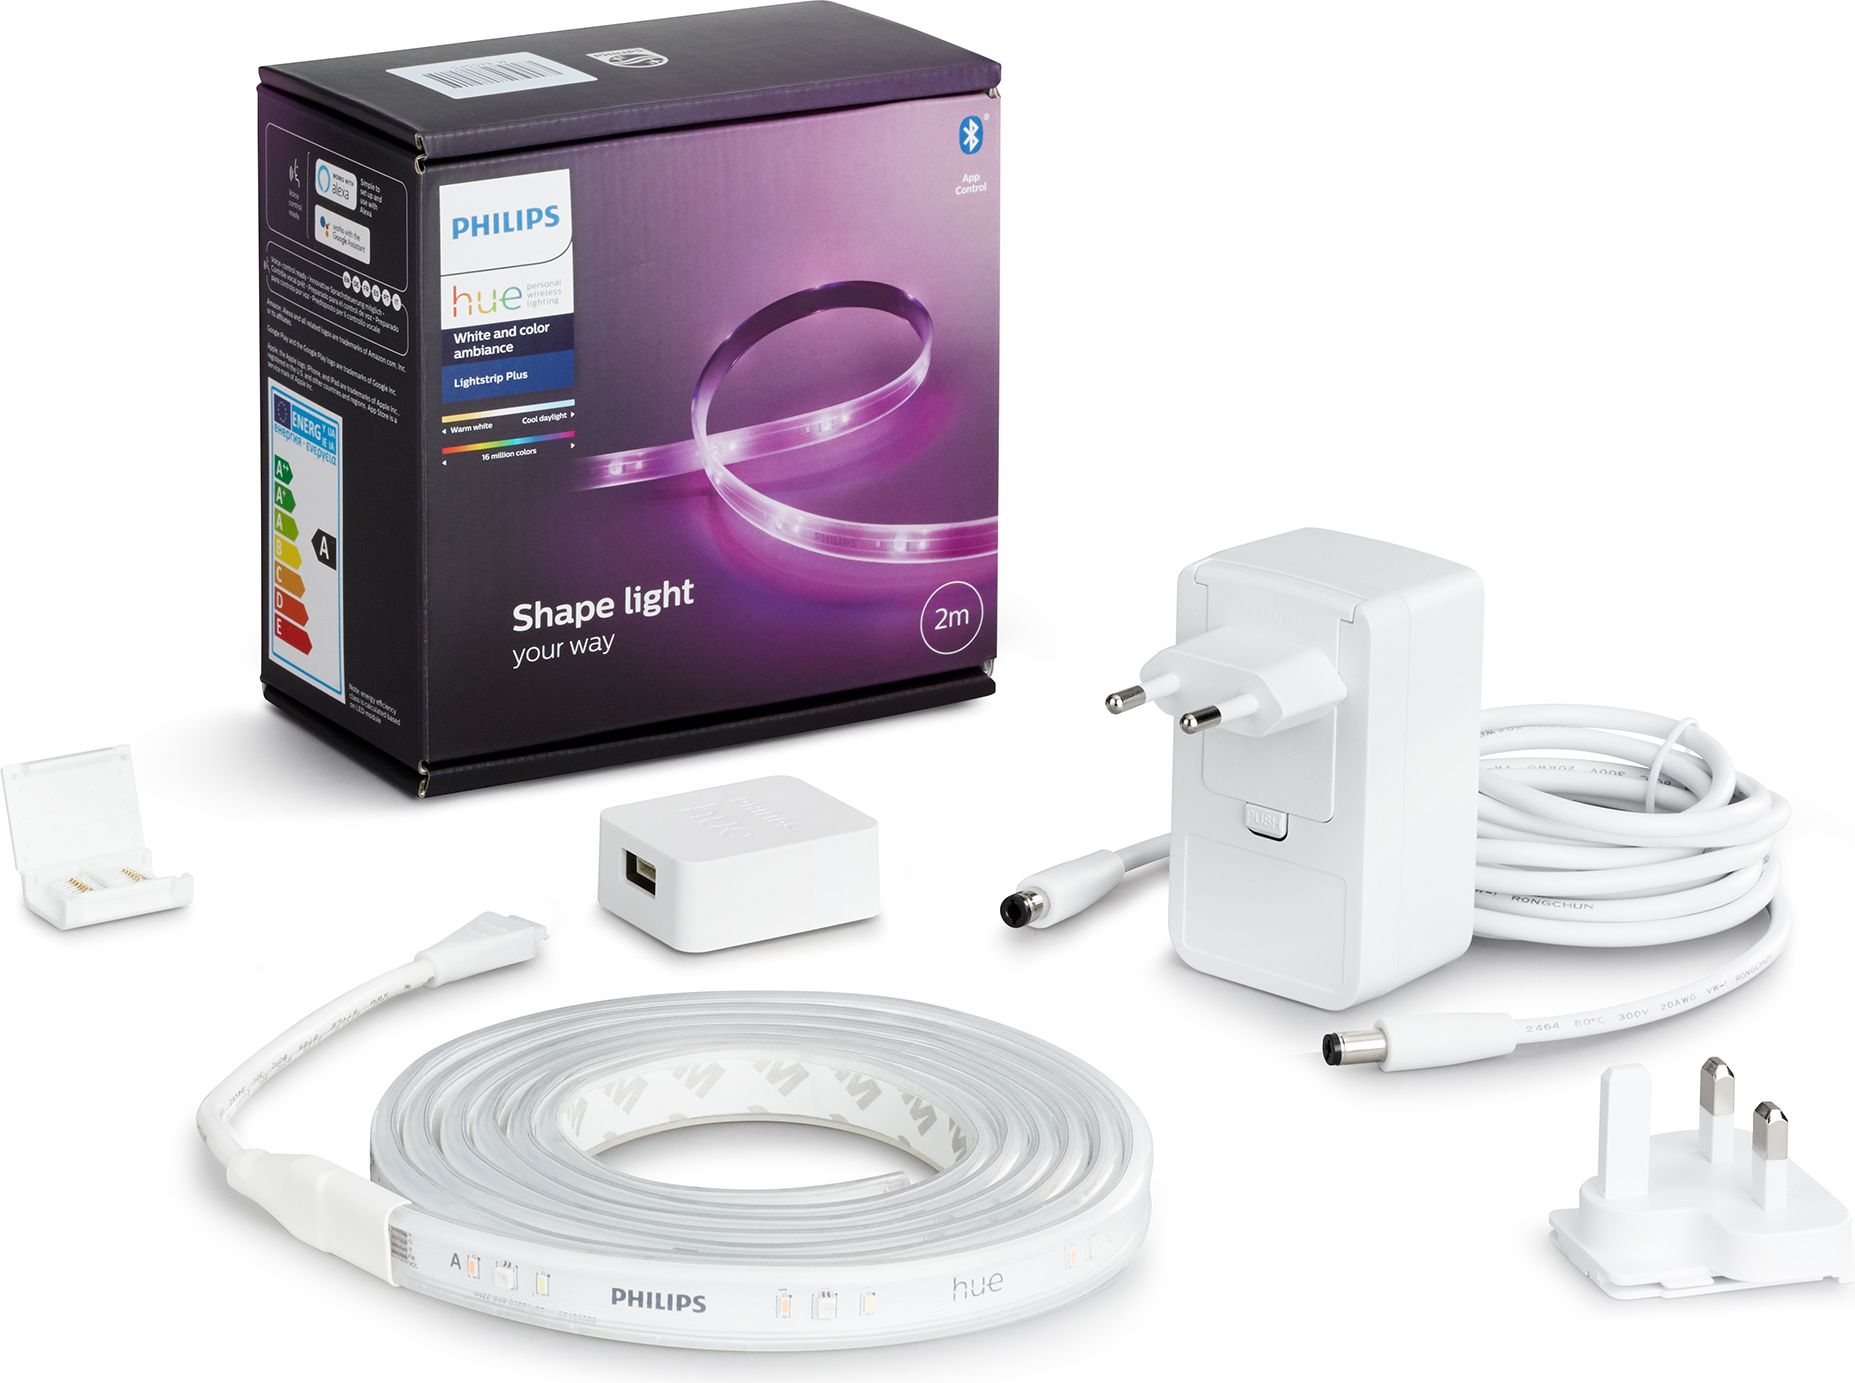 Philips Hue White and Colour Smart LED Lightstrip 2m - White, White